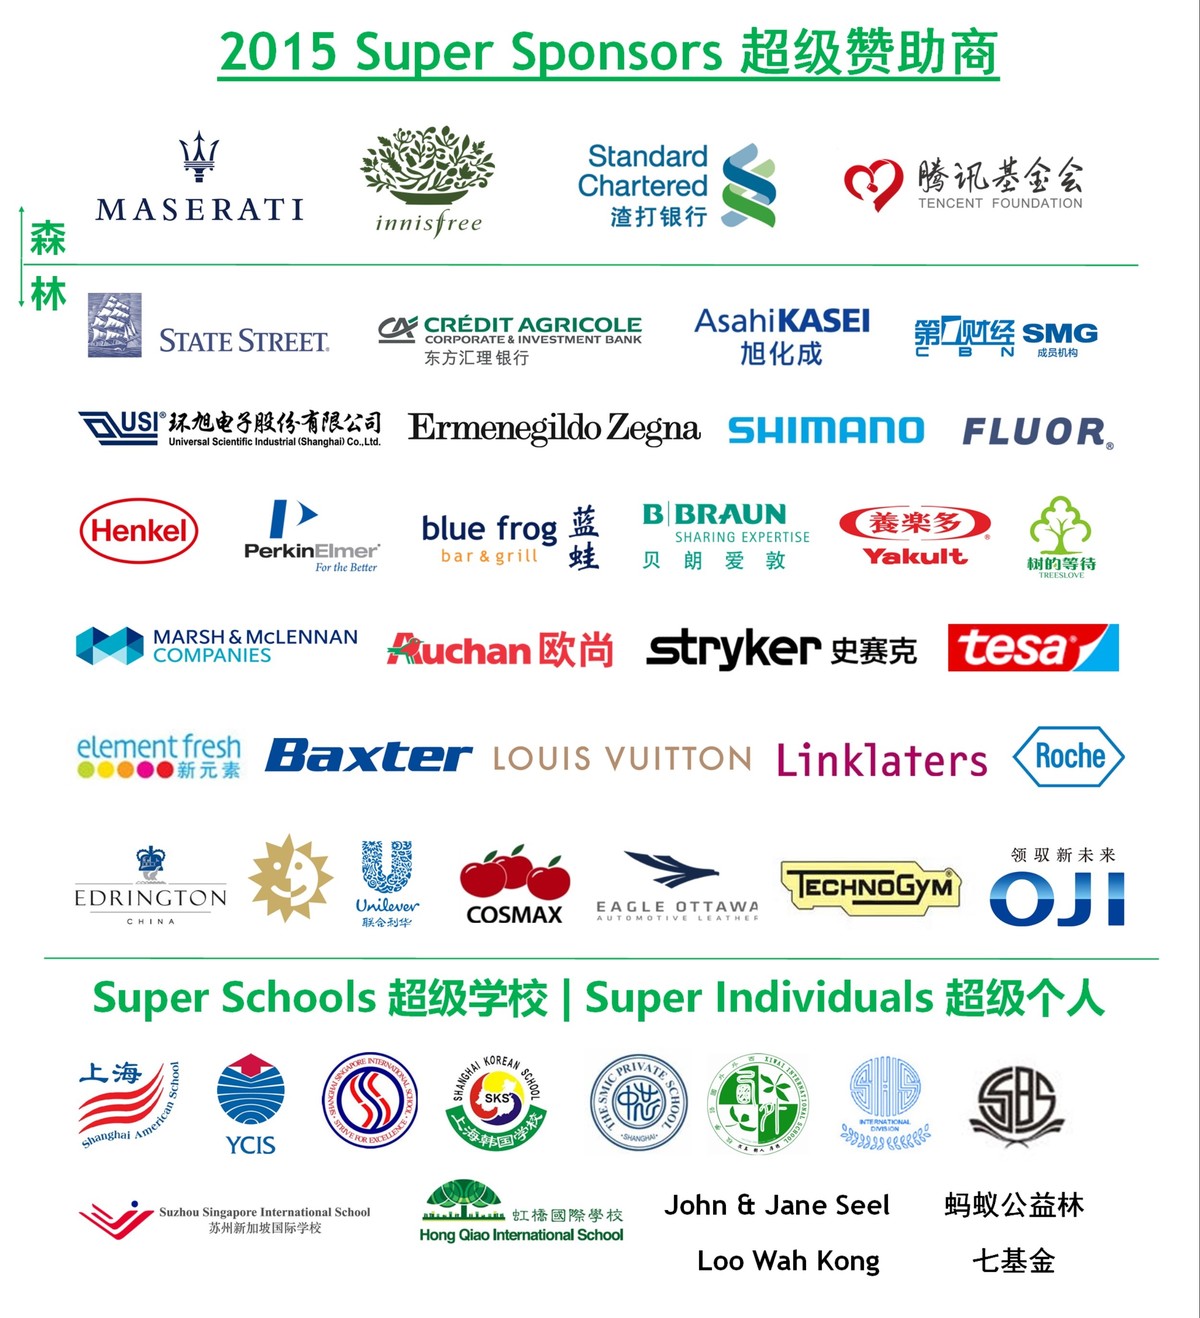 2015 Super Sponsors